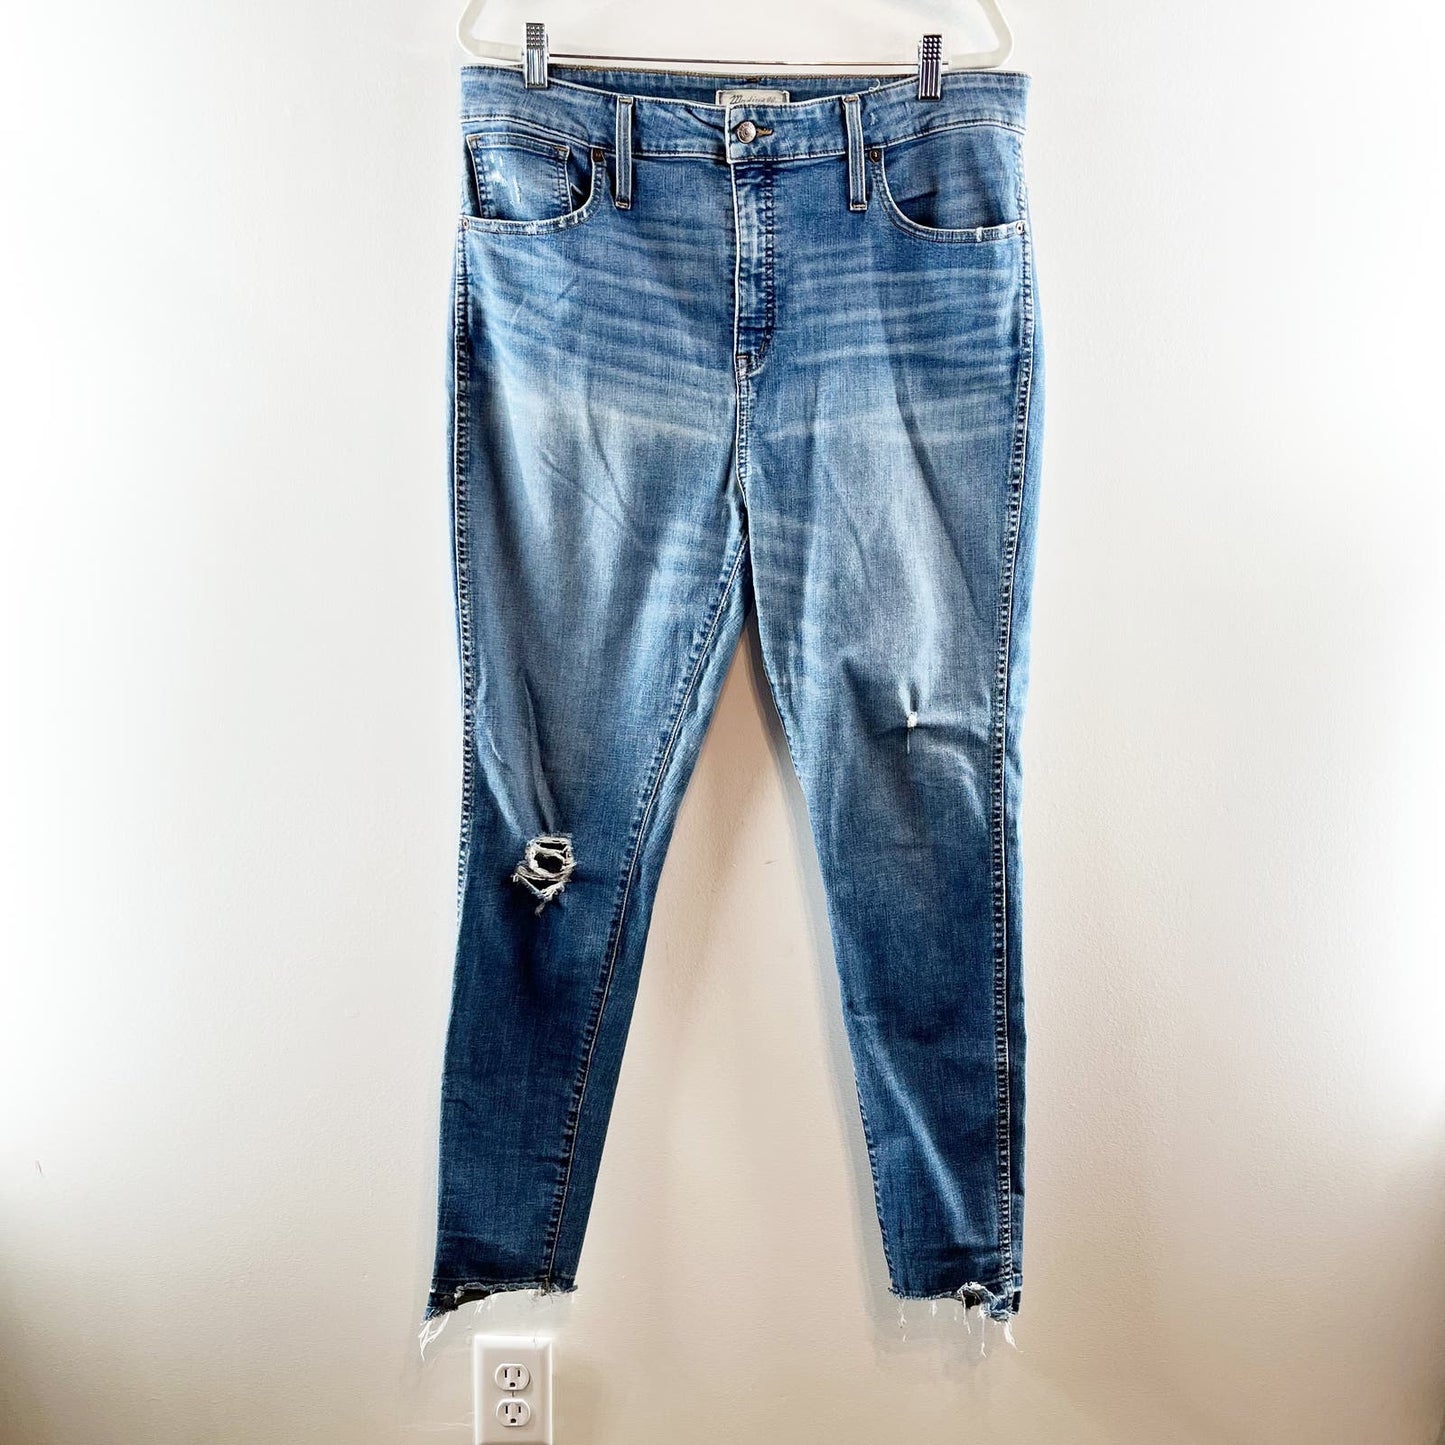 Madewell Medium Wash Curvy High-Waisted Distressed Skinny Jeans Blue 34 Tall